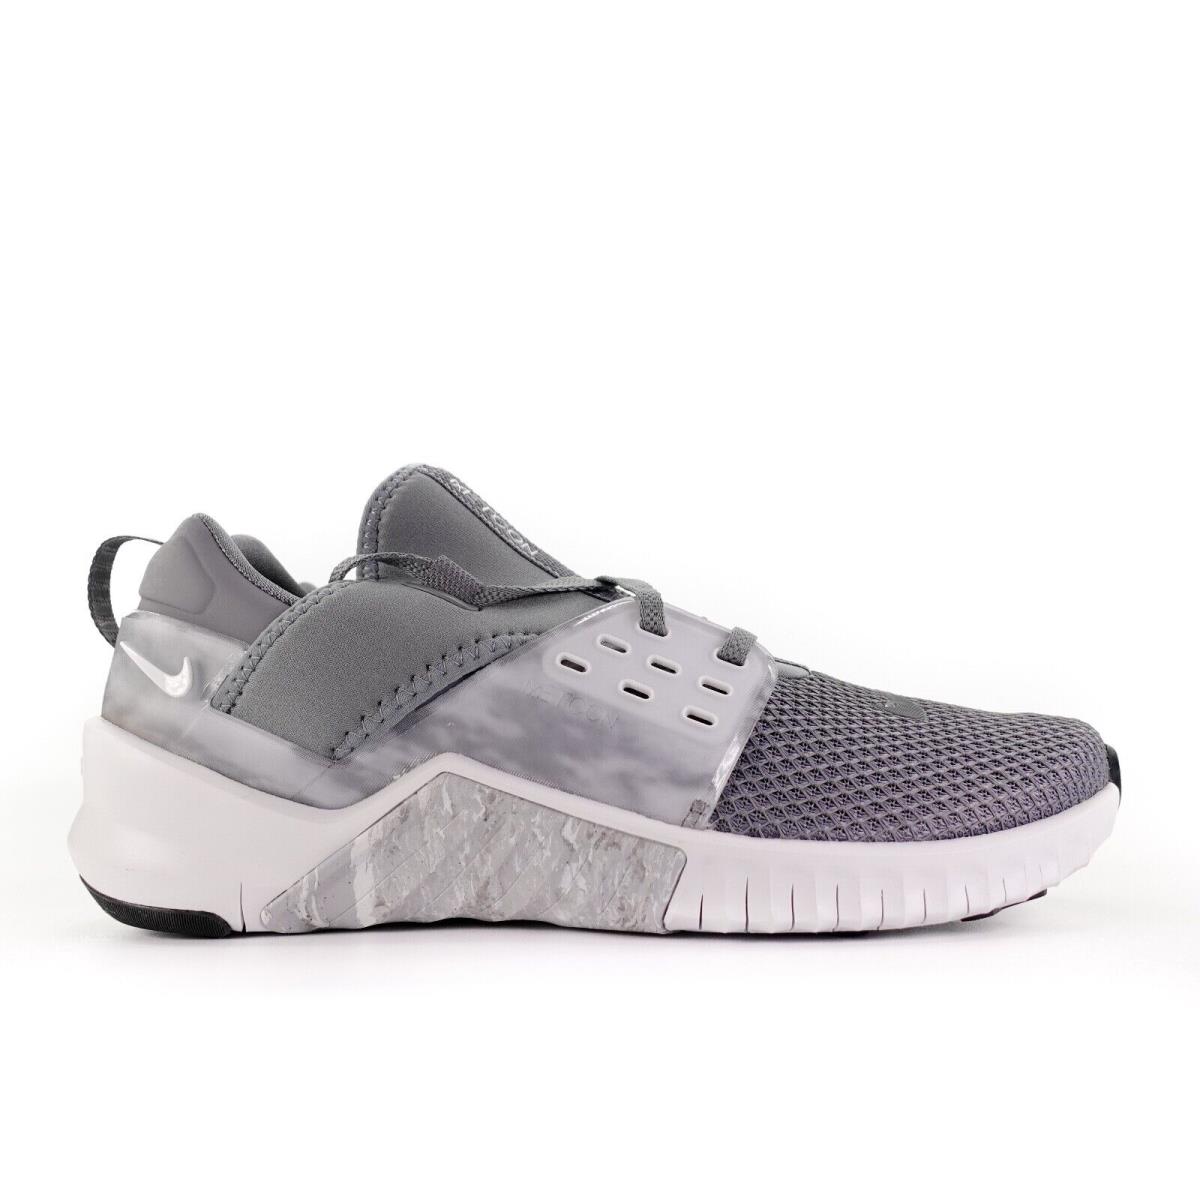 Nike Free Metcon 2 Training Shoes Cool Grey AQ8306 003 Mens Size 10